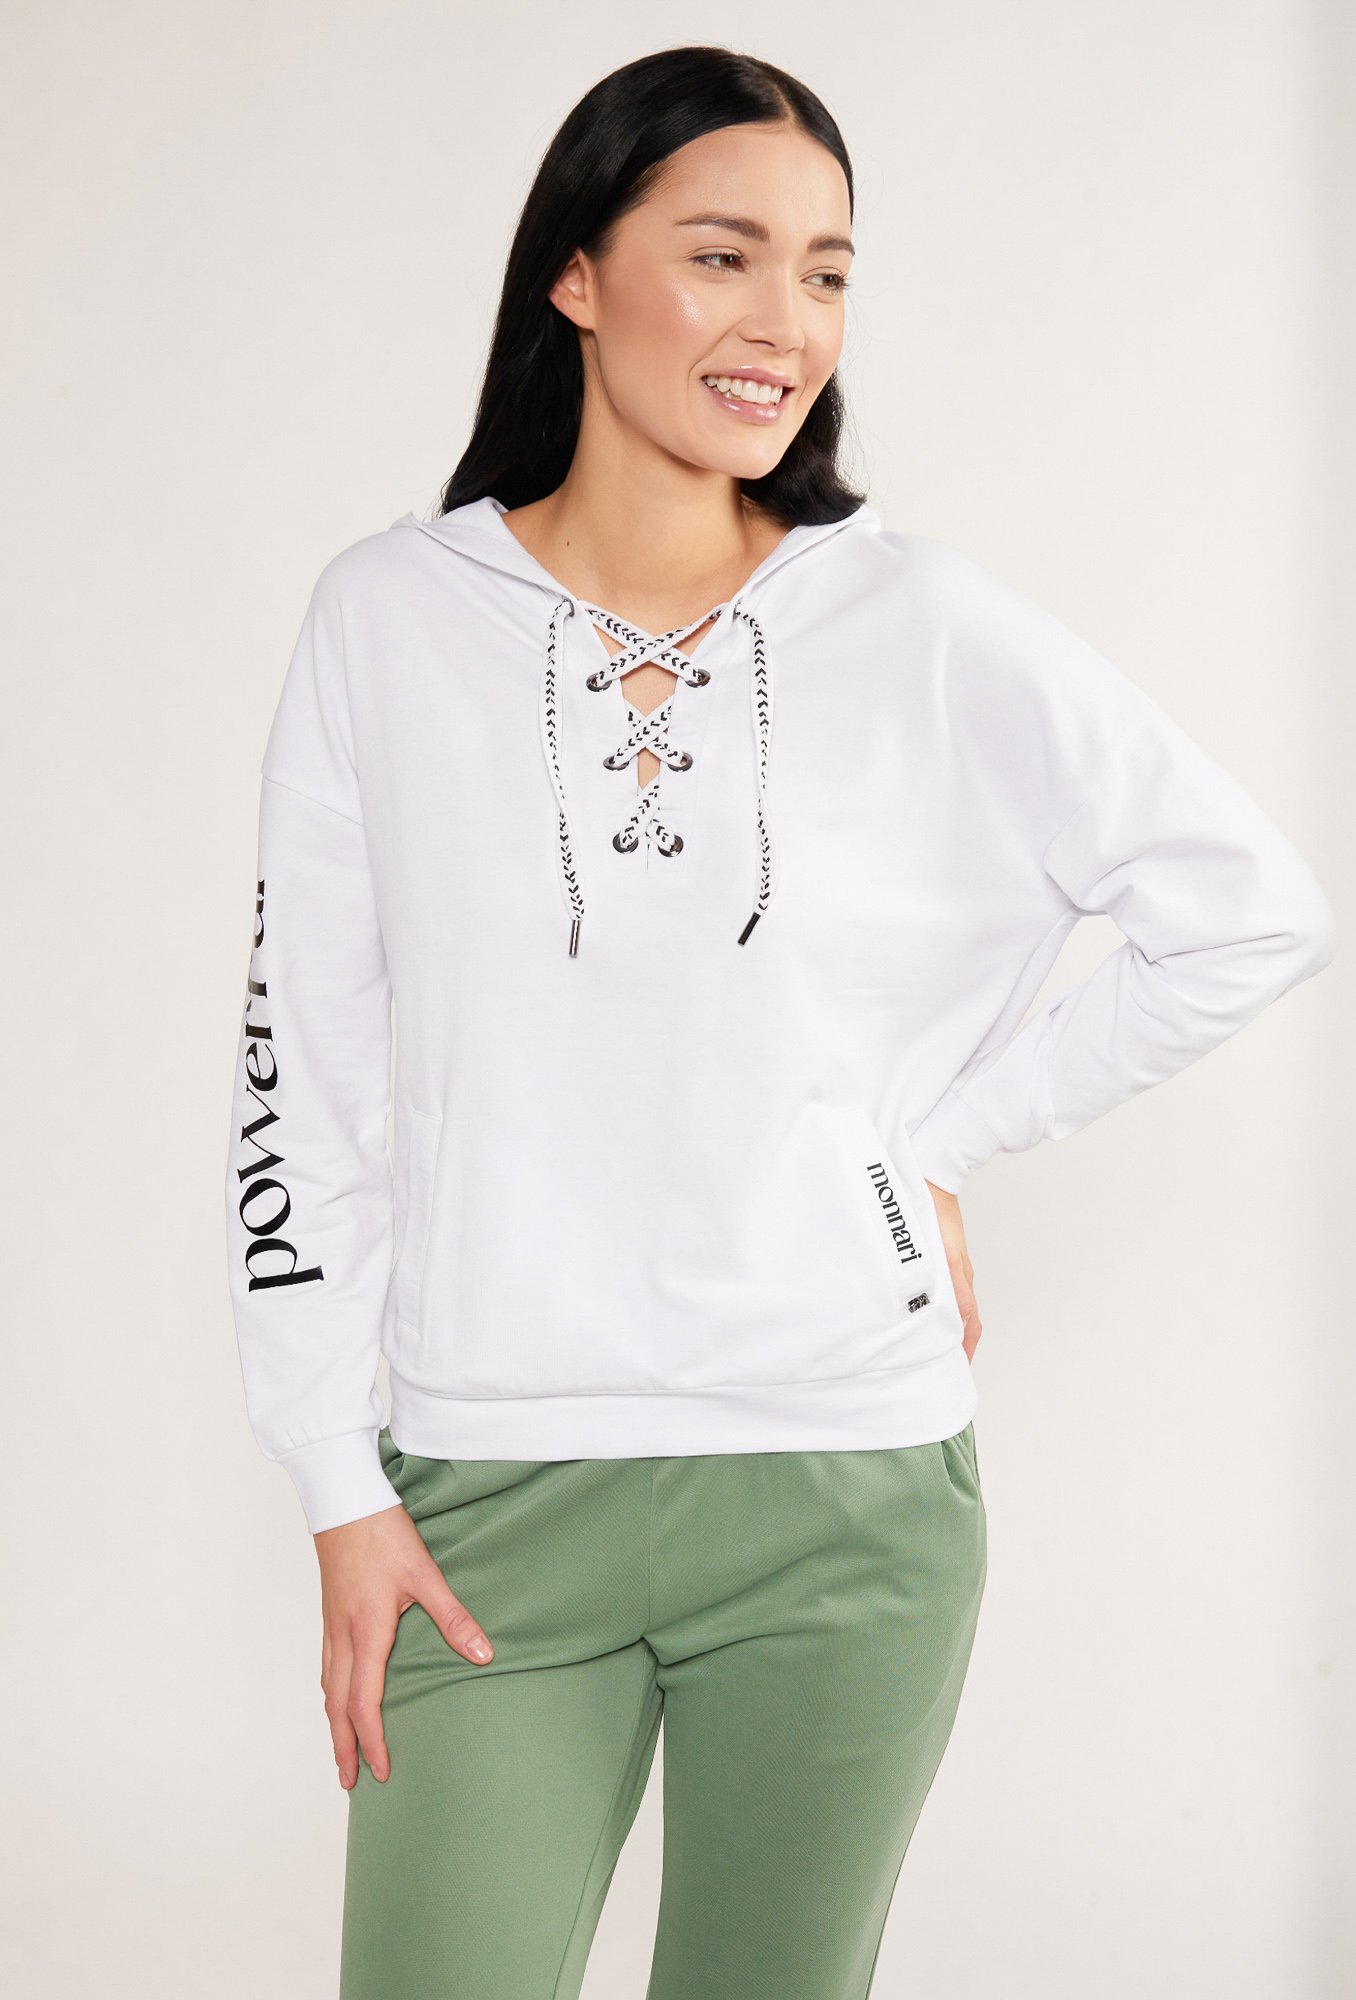 MONNARI Woman's Sweatshirts Sweatshirt With Decorative Binding